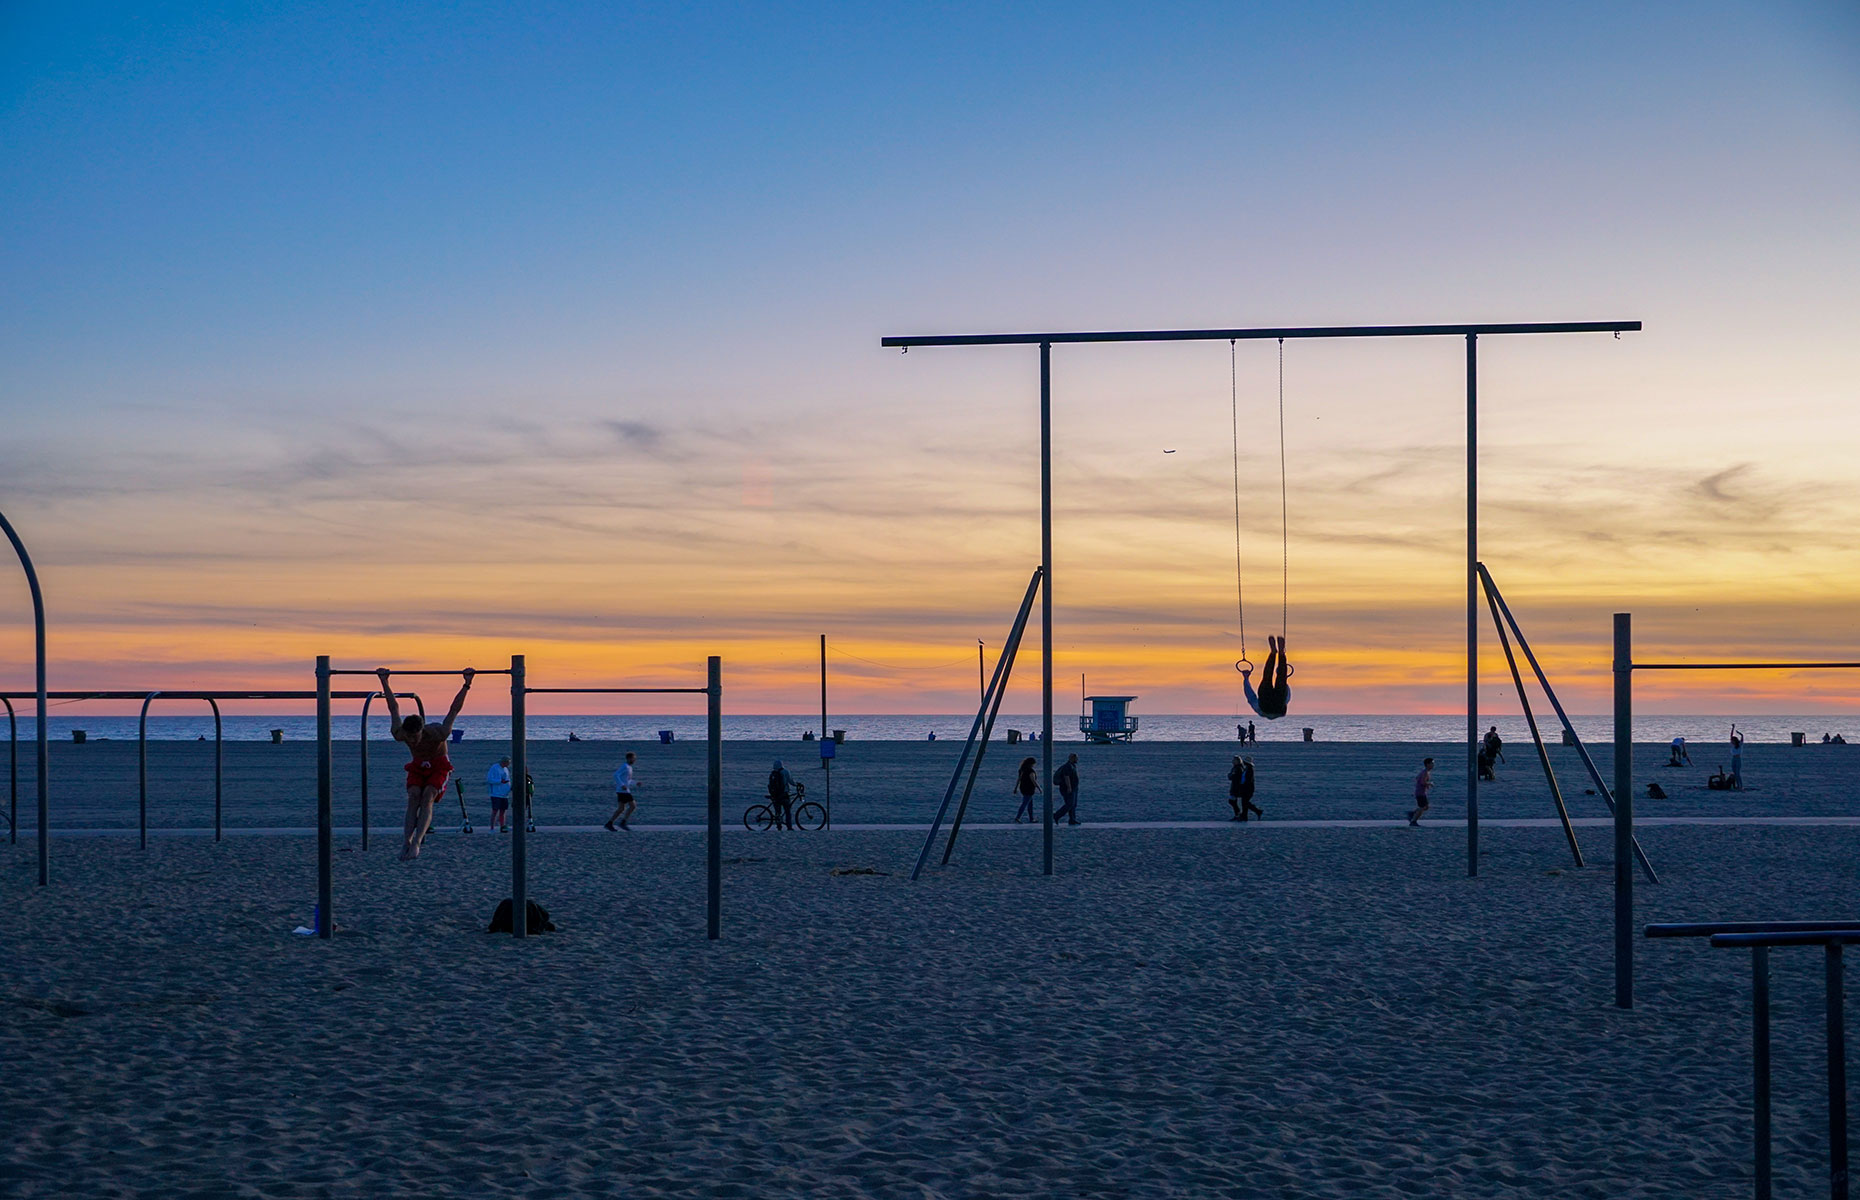 Muscle Beach, Santa Monica (Image: bonandbon/Shutterstock)